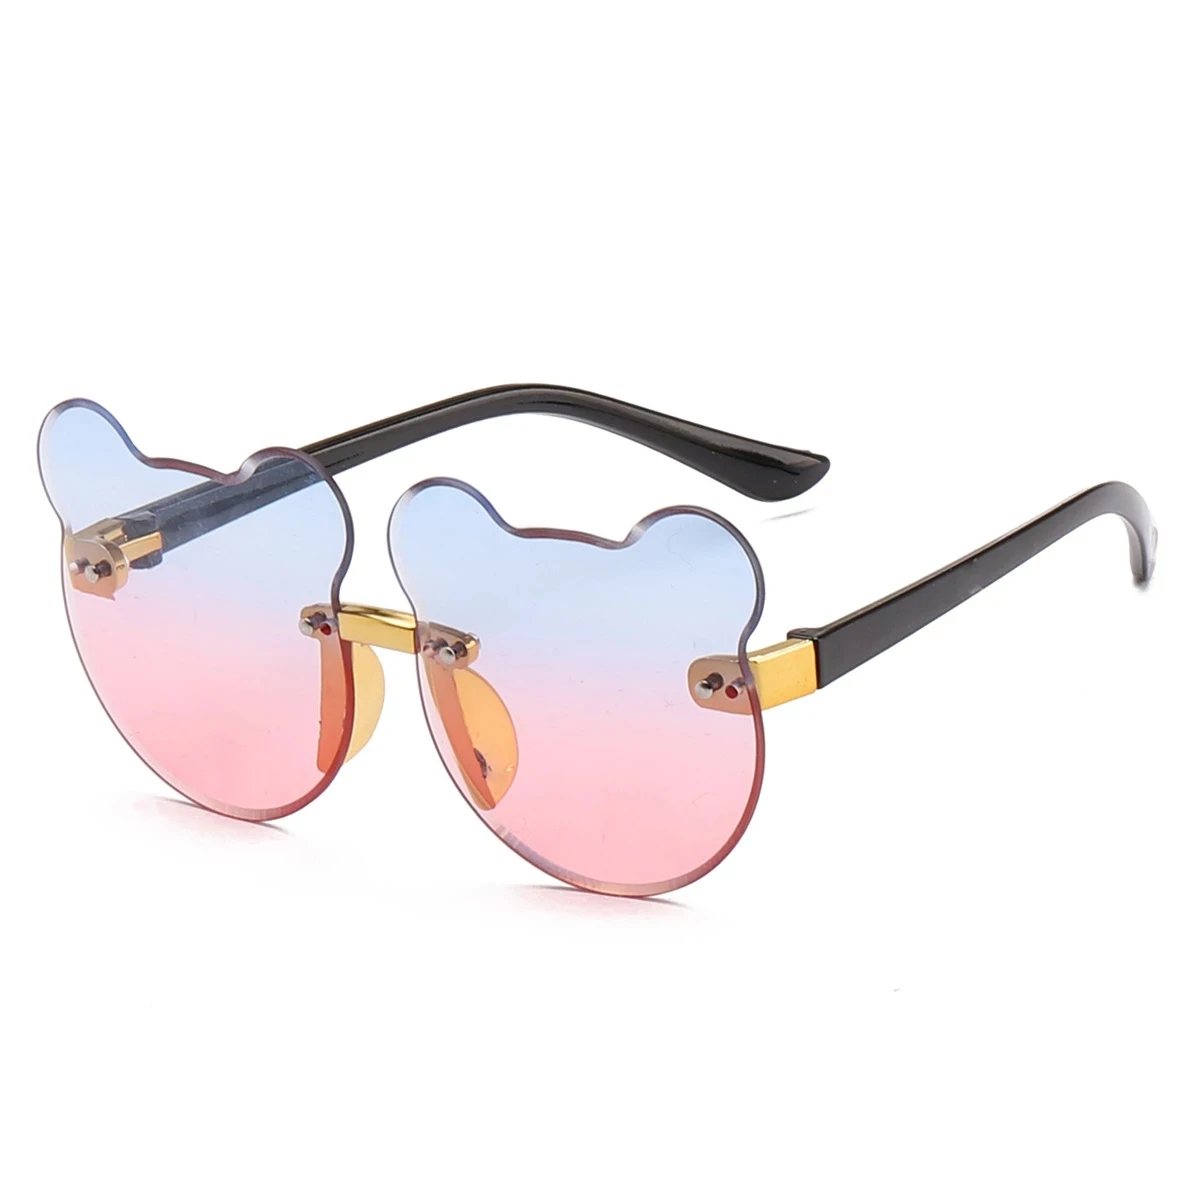 

Bear Kids Sunglasses Black Blue Pink Children New Trends Shades Girls Cat Eye Sun Glasses, Picture shows